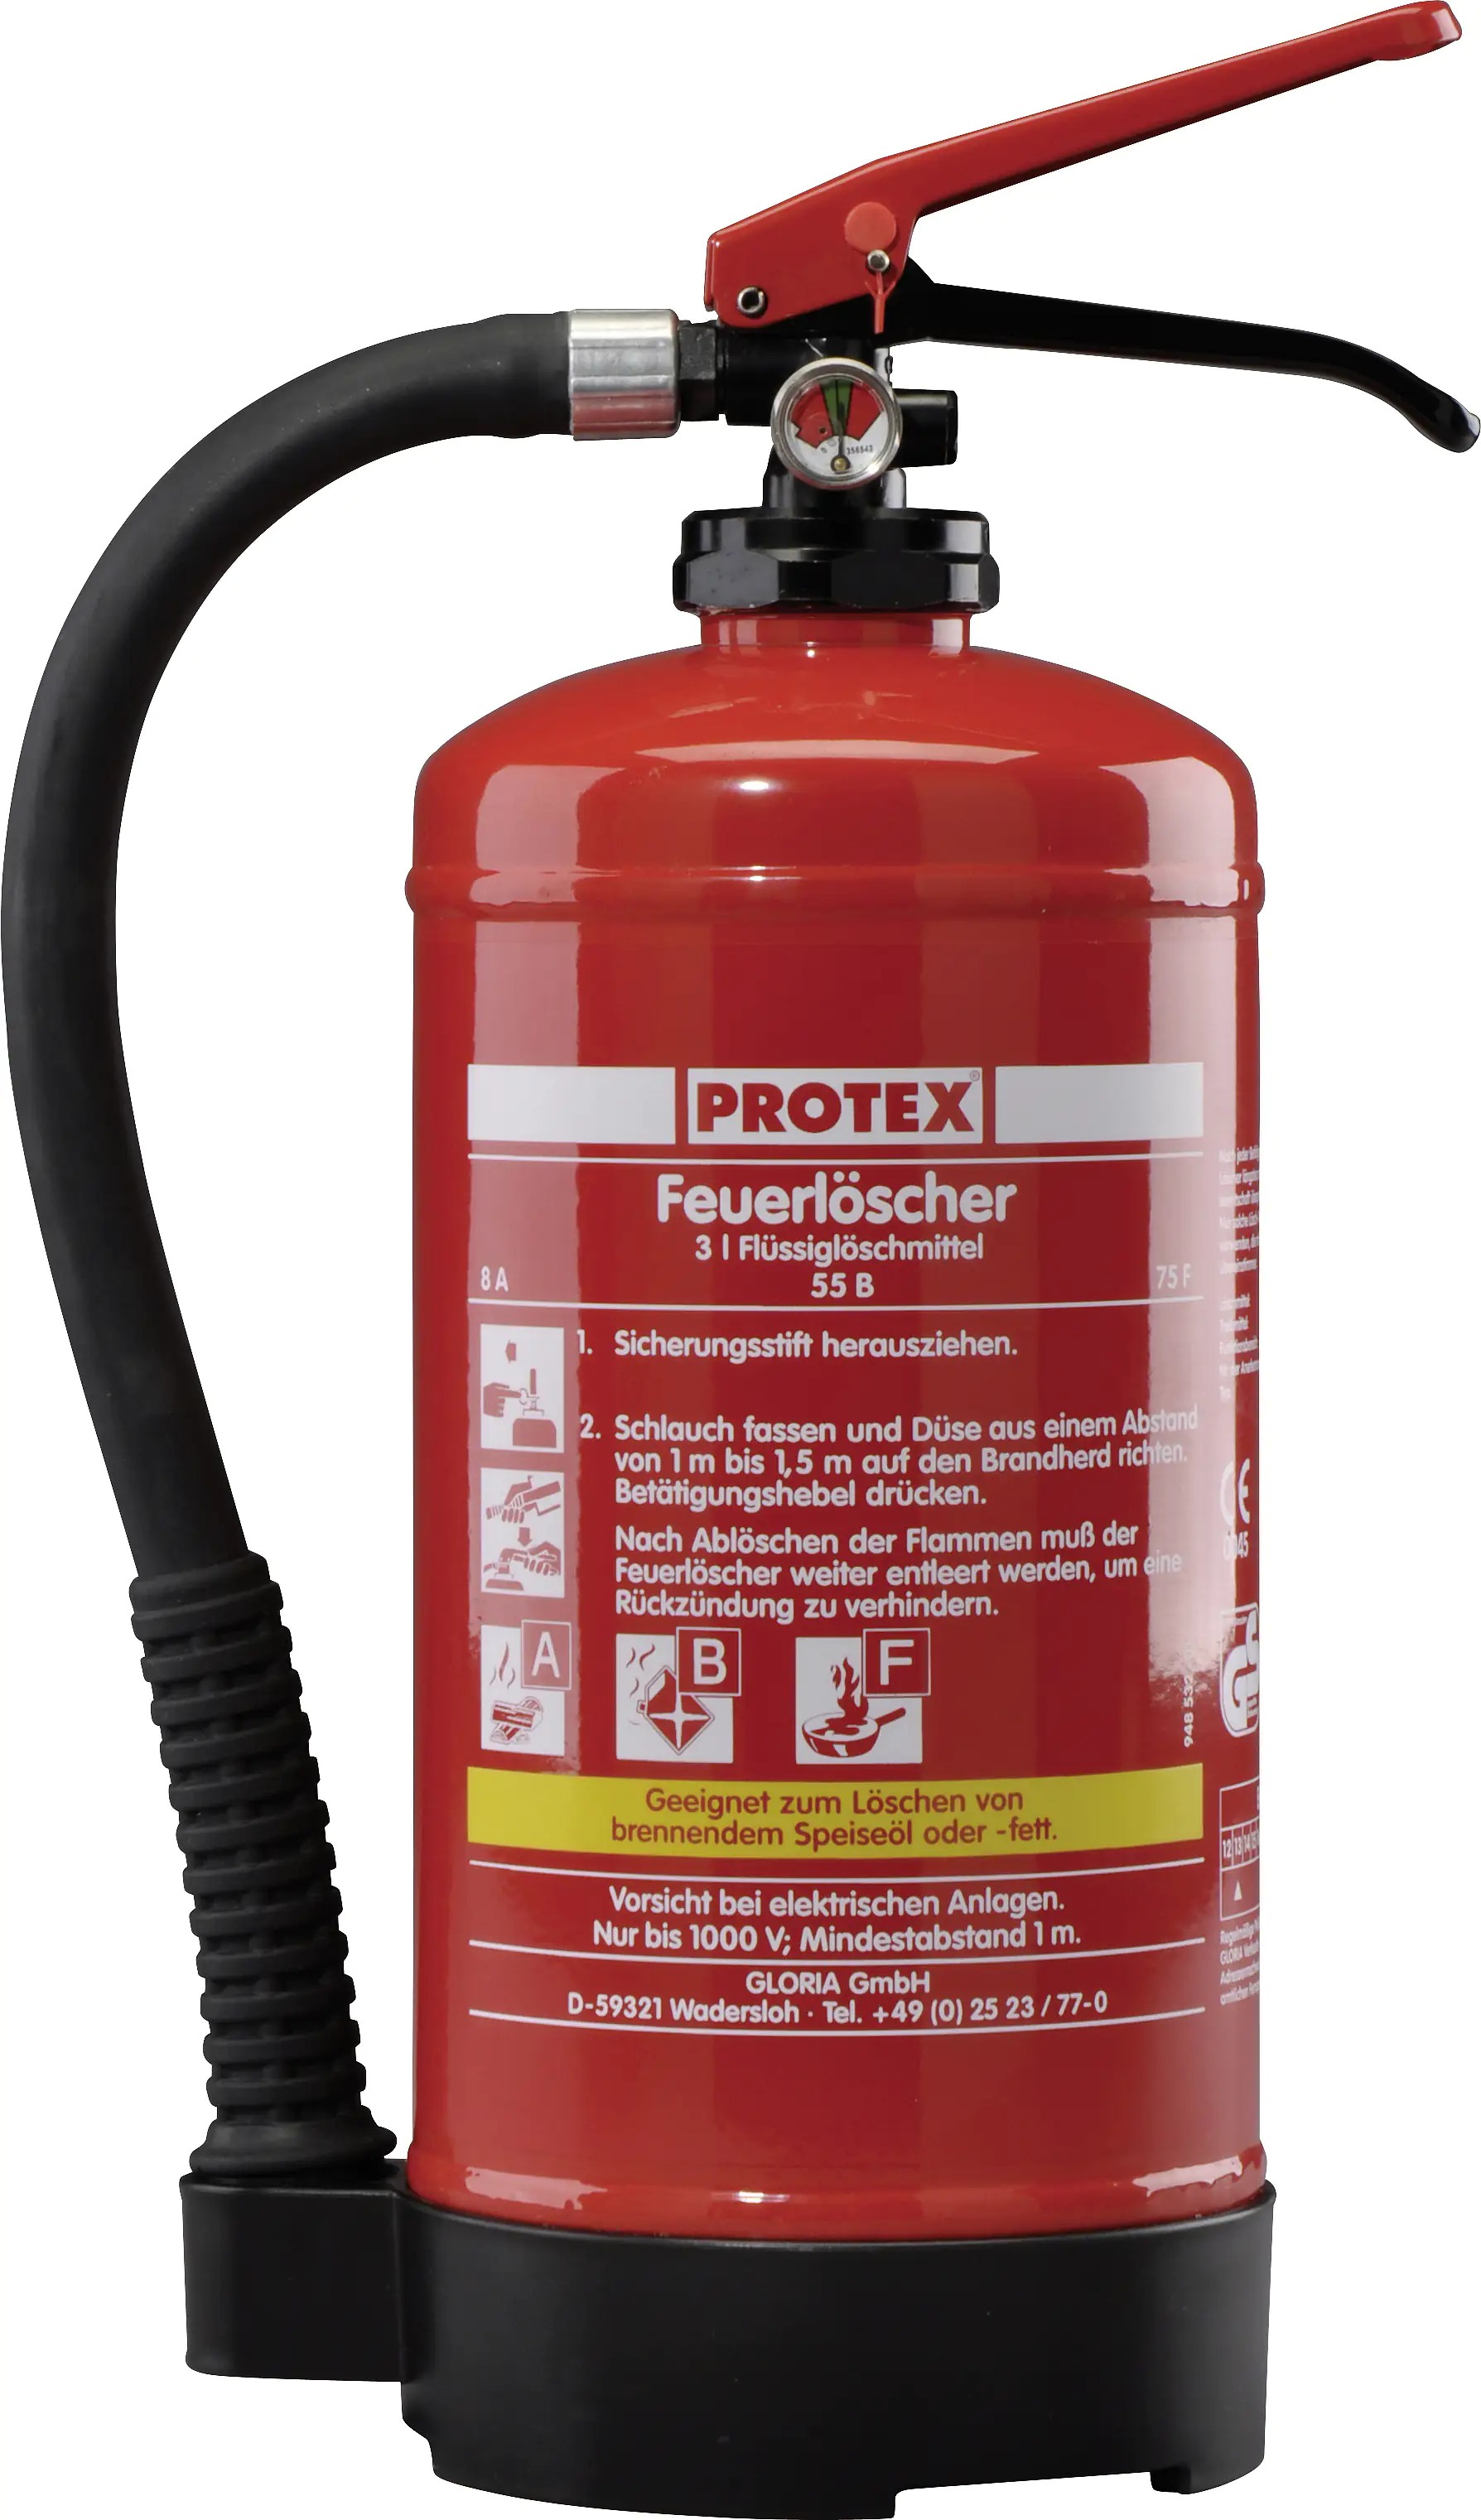 Protex Fettbrandfeuerlöscher FBDP3 Schaum Löschmittel kaufen